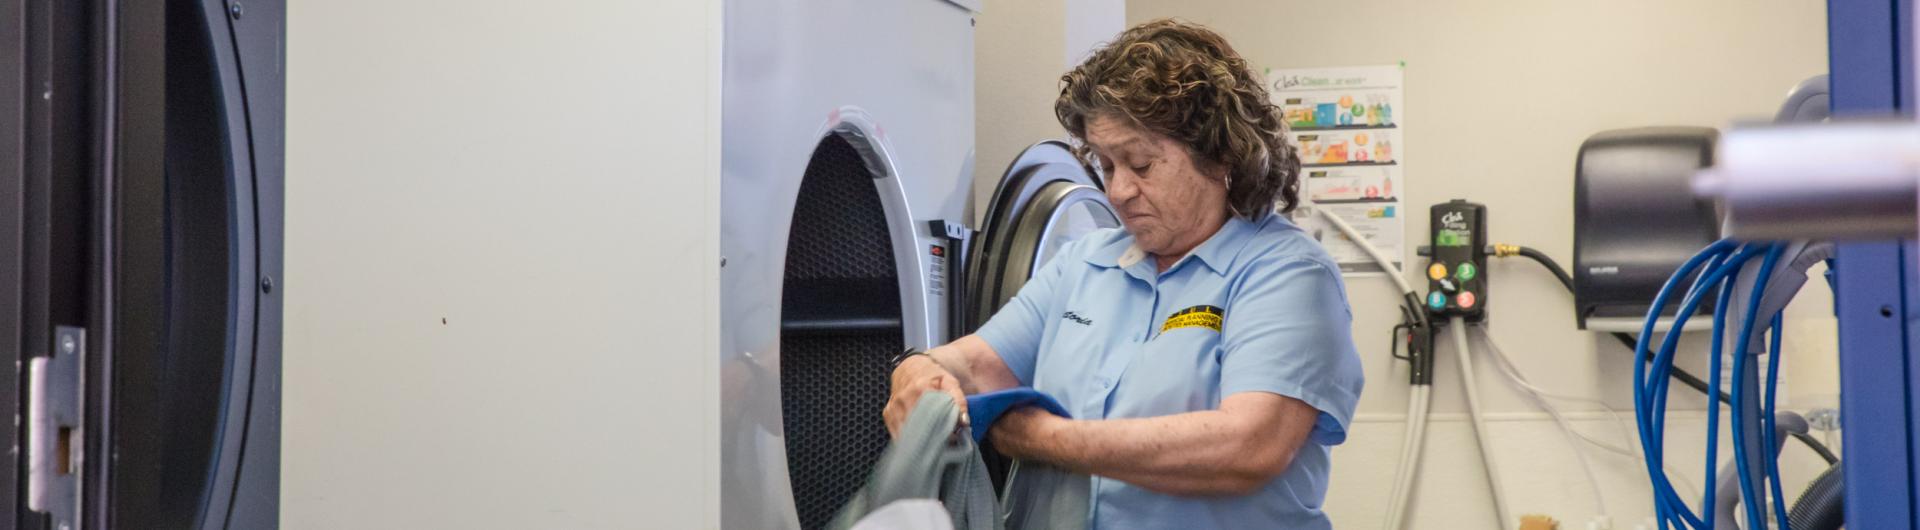 PPFM Custodial Employee Empties Washing Machine